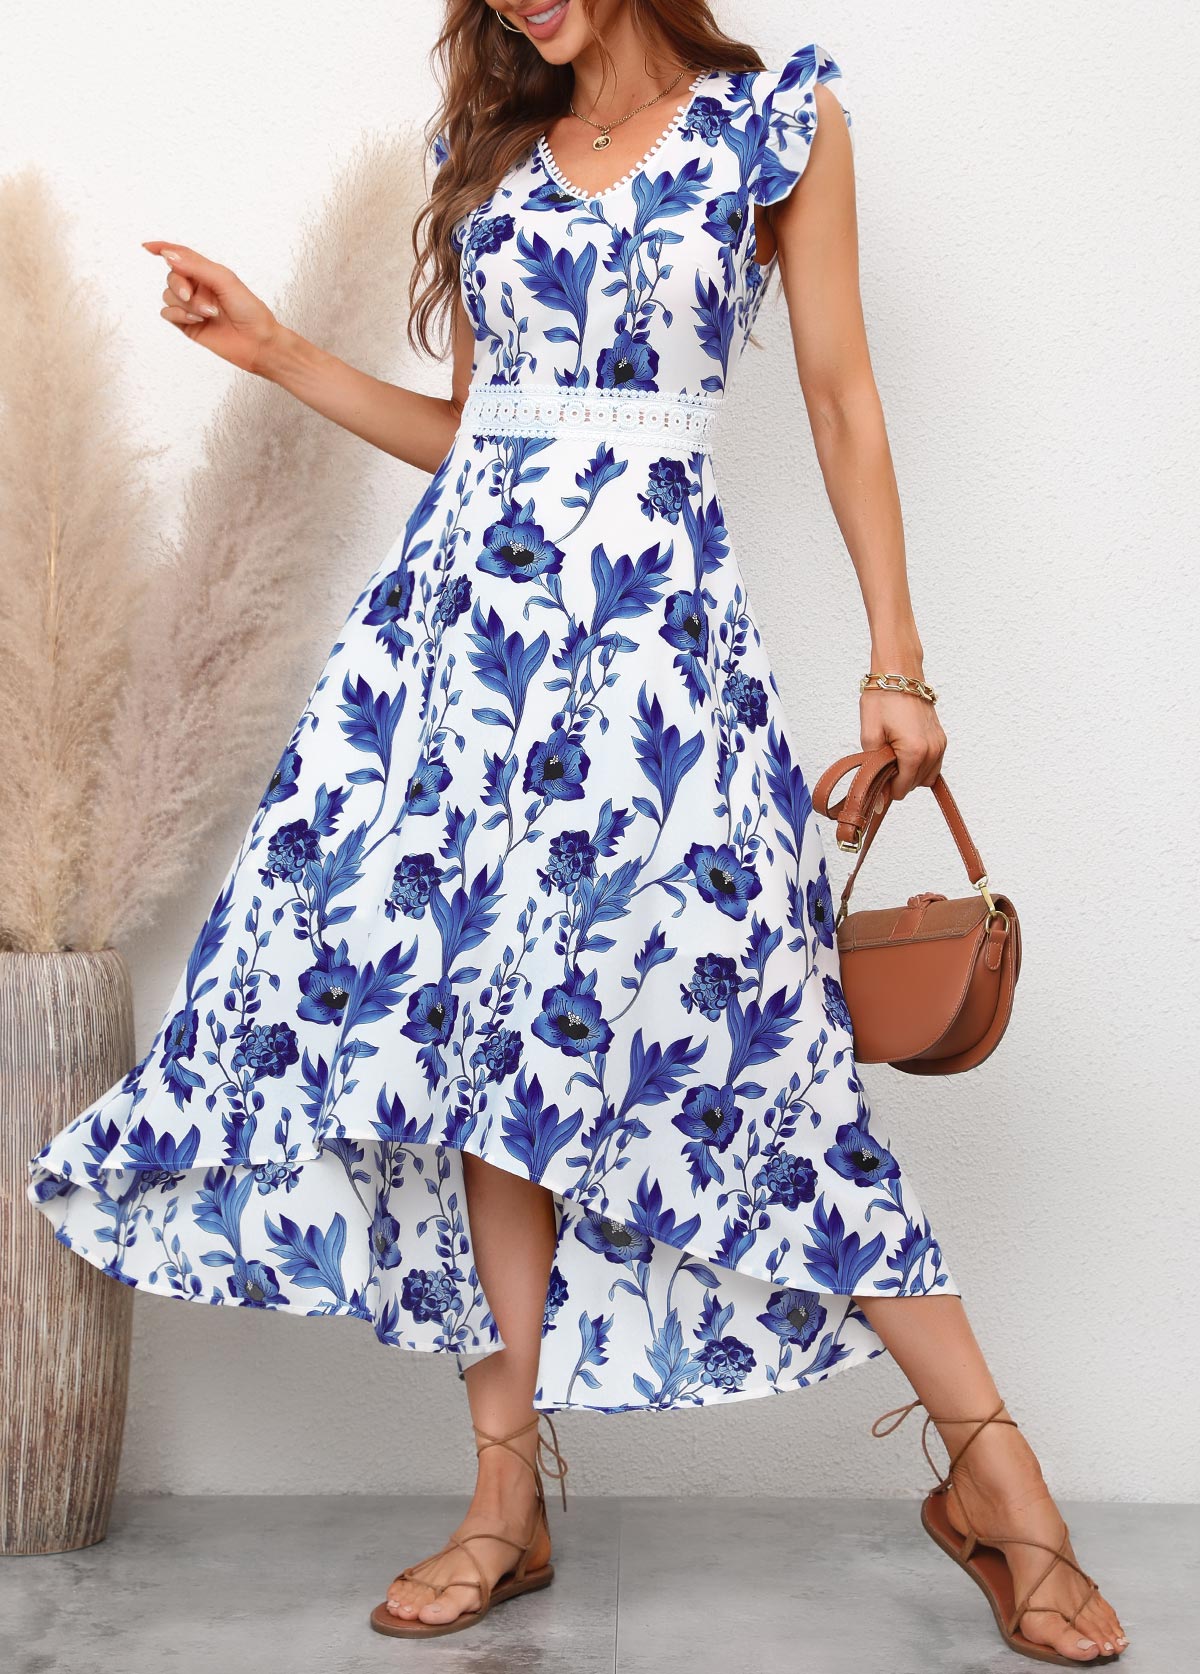 Ruffle Sleeve Lace Stitching Floral Print Blue Dress